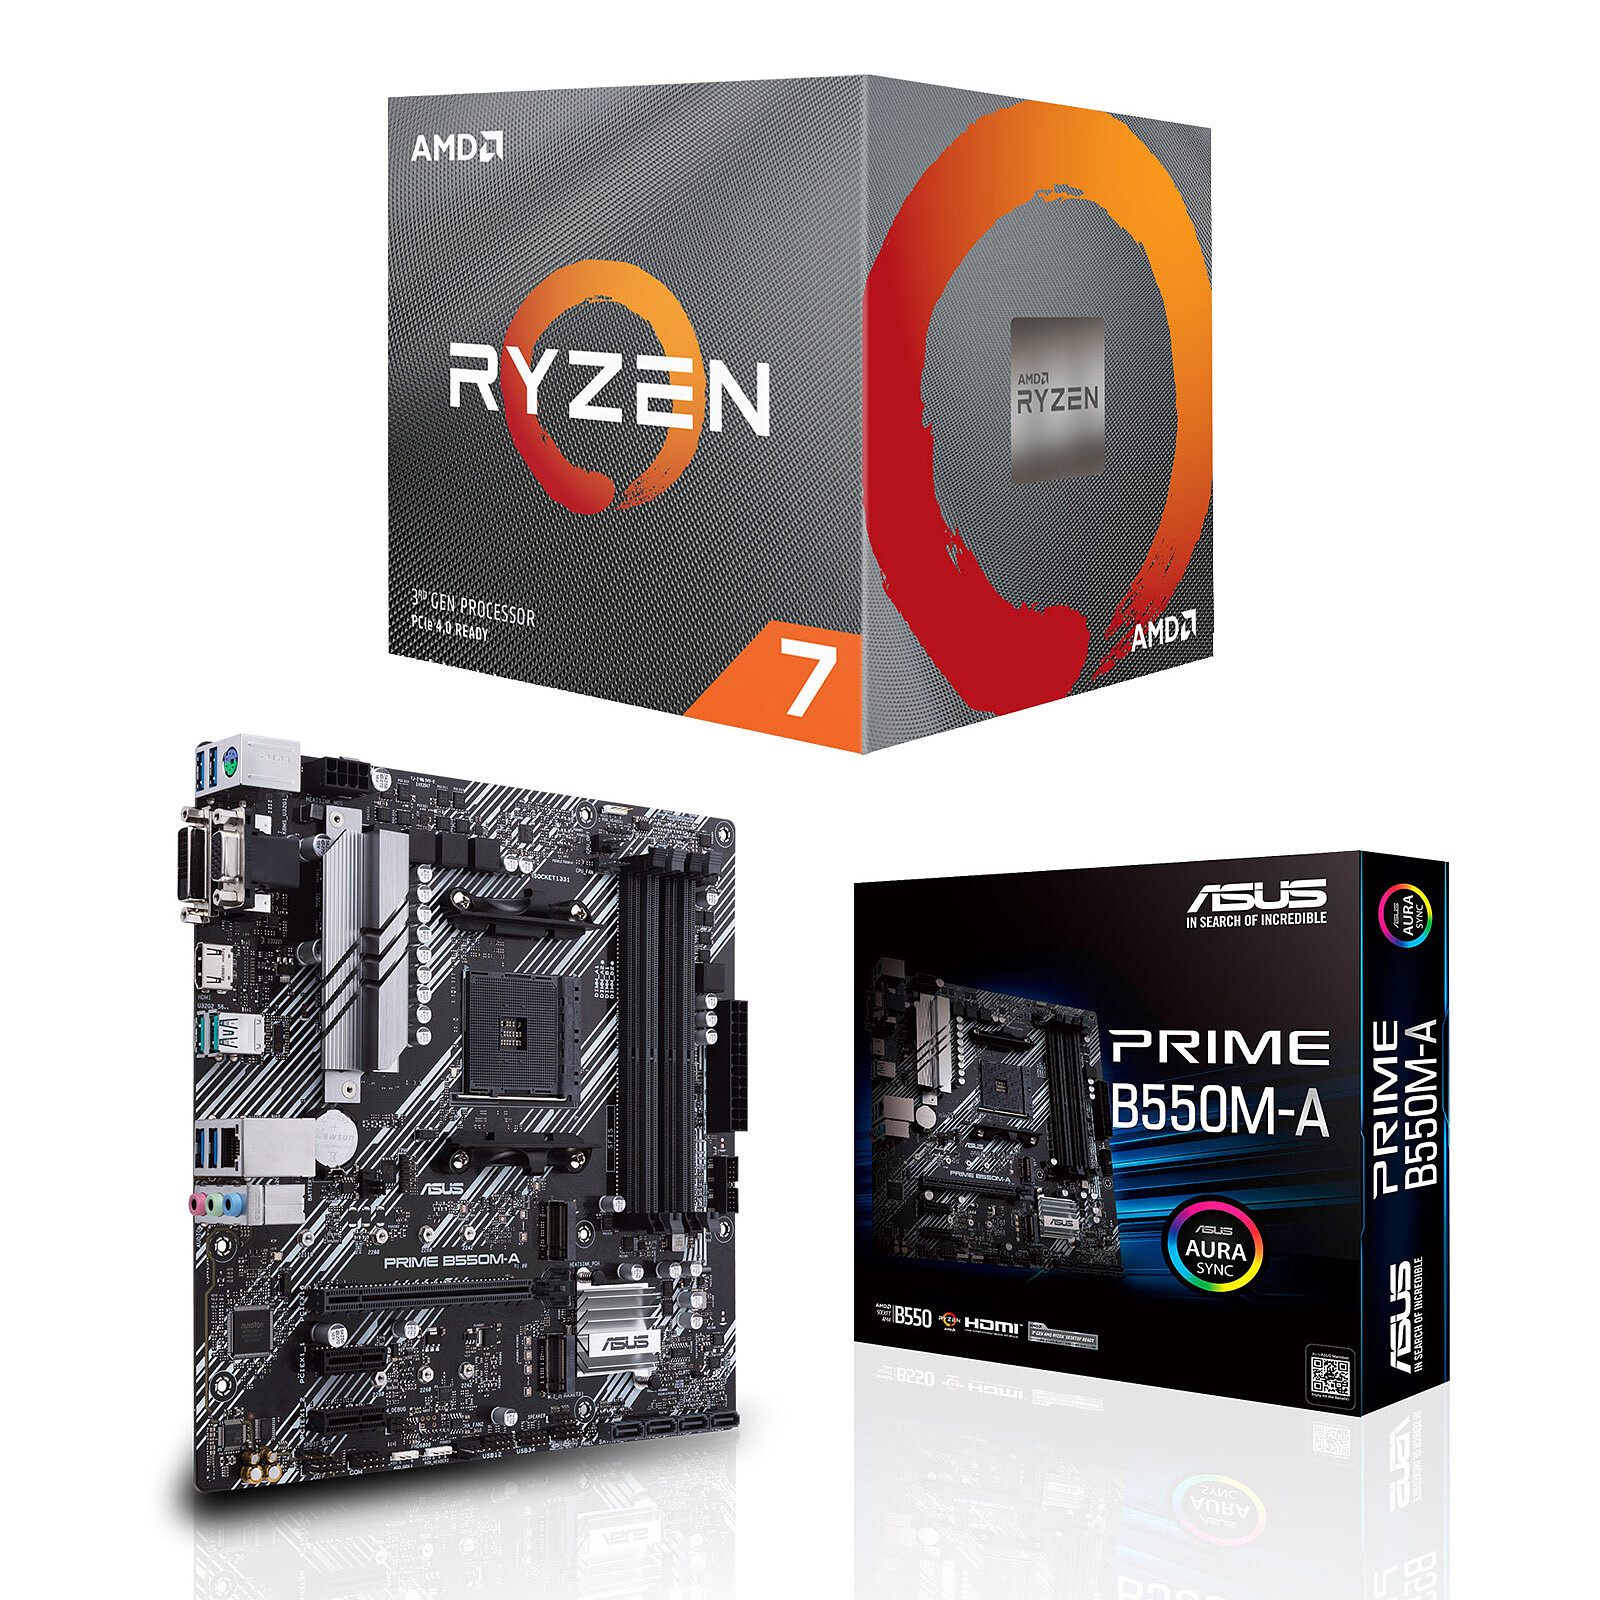 AMD Ryzen 7 3700x - PCパーツ